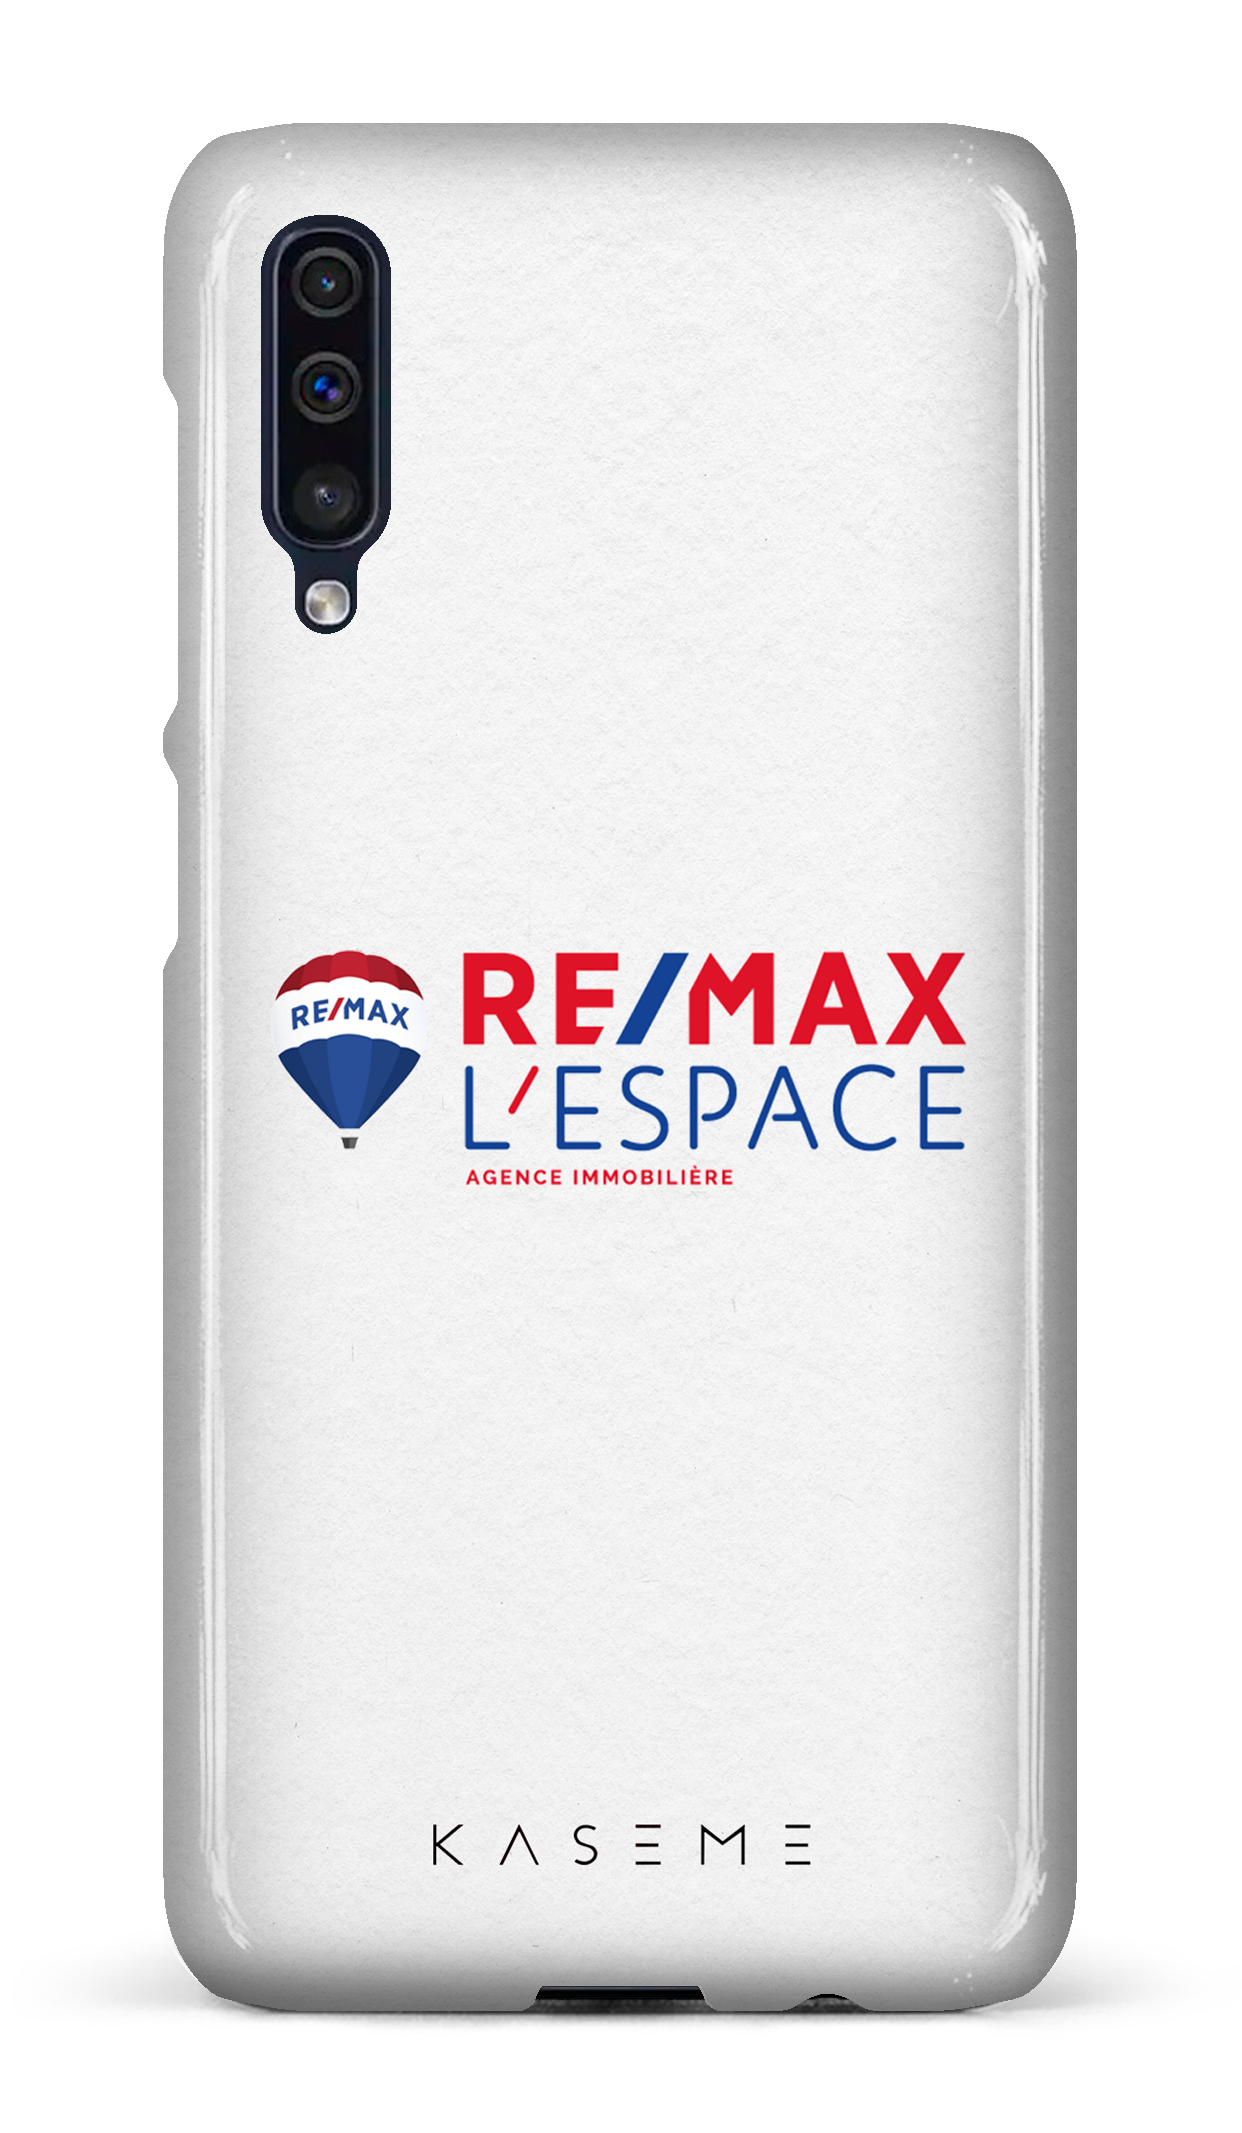 Remax L'Espace Blanc - Galaxy A50